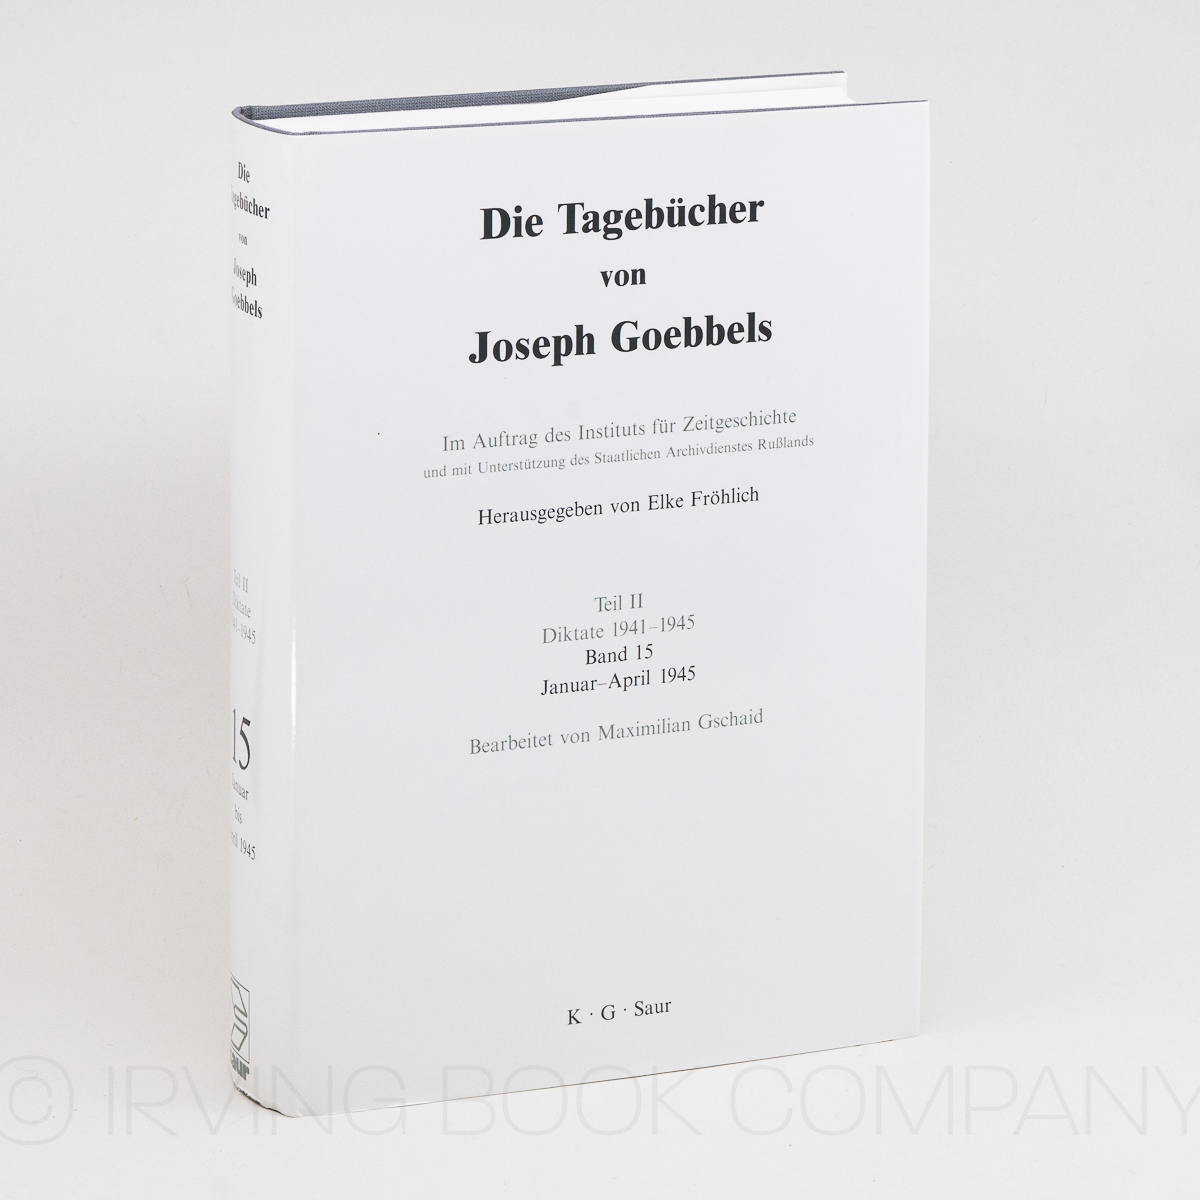 Die Tagebücher von Joseph Goebbels. Teil II: Diktate 1941-1945, Band 15: Januar-April 1945 - GOEBBELS, JOSEPH; ELKE FRÖHLICH (Editor)